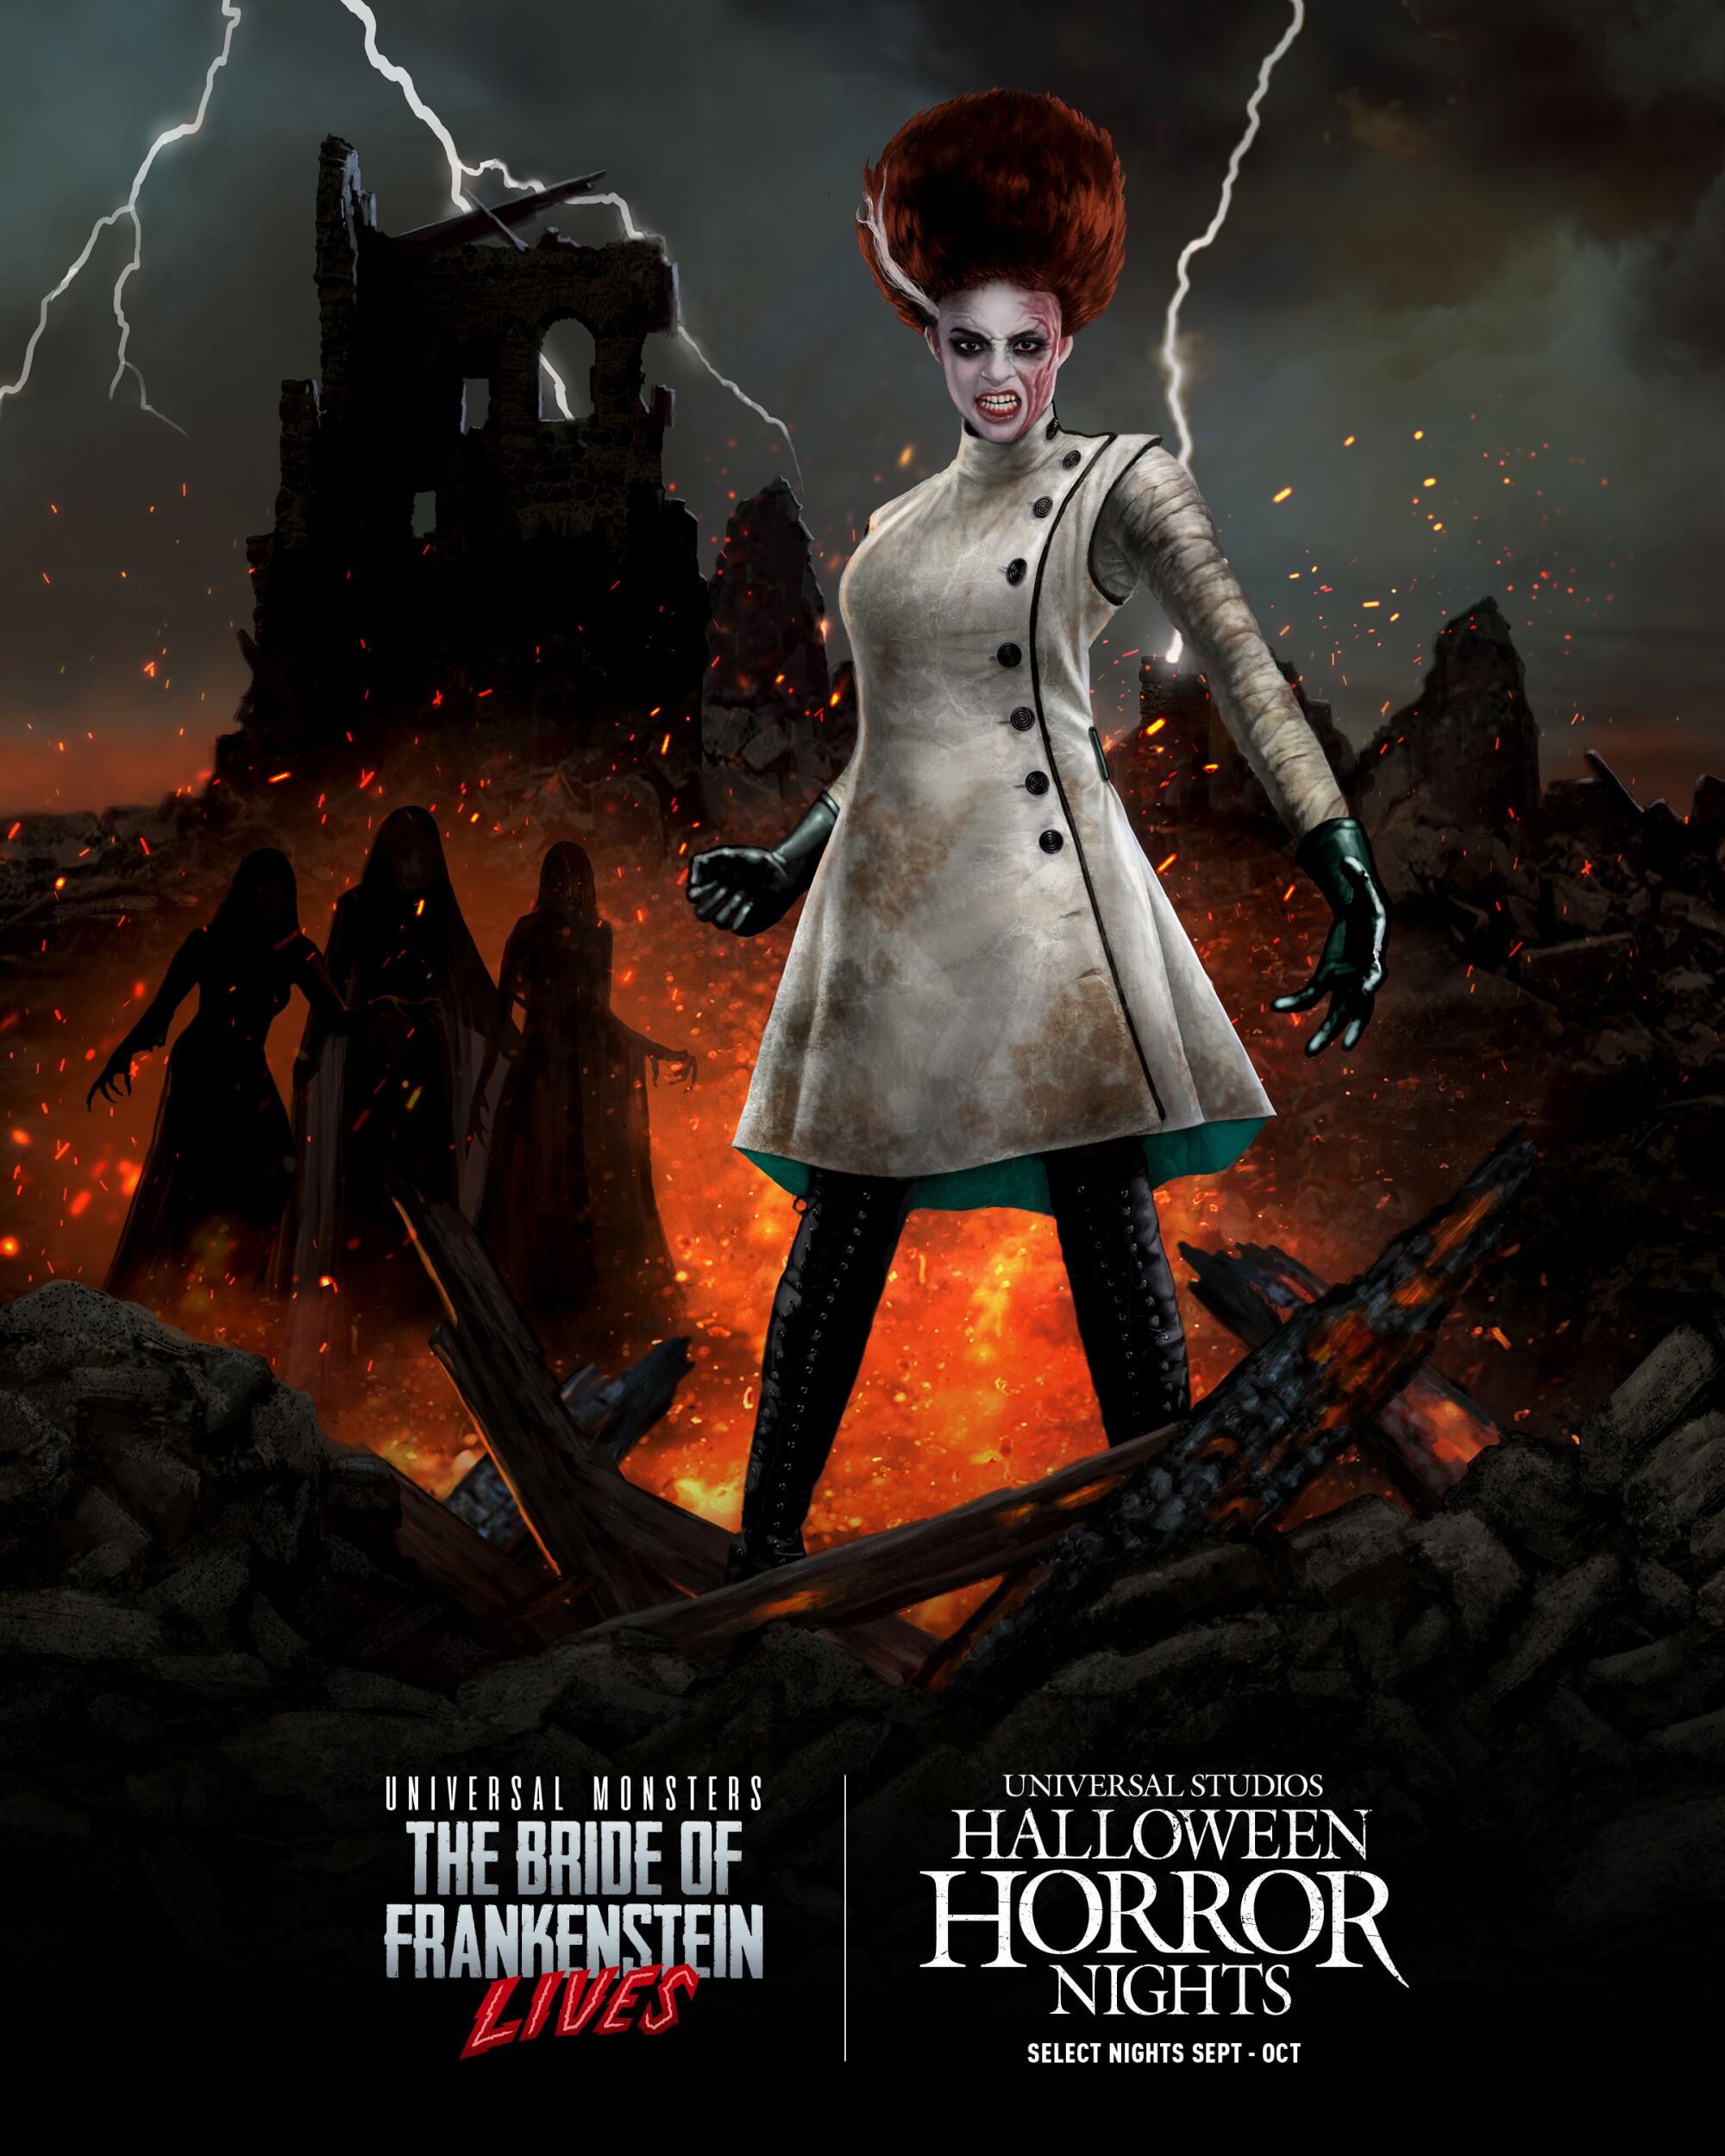 Este es el afiche de "Universal Monsters: The Bride of Frankenstein Lives".